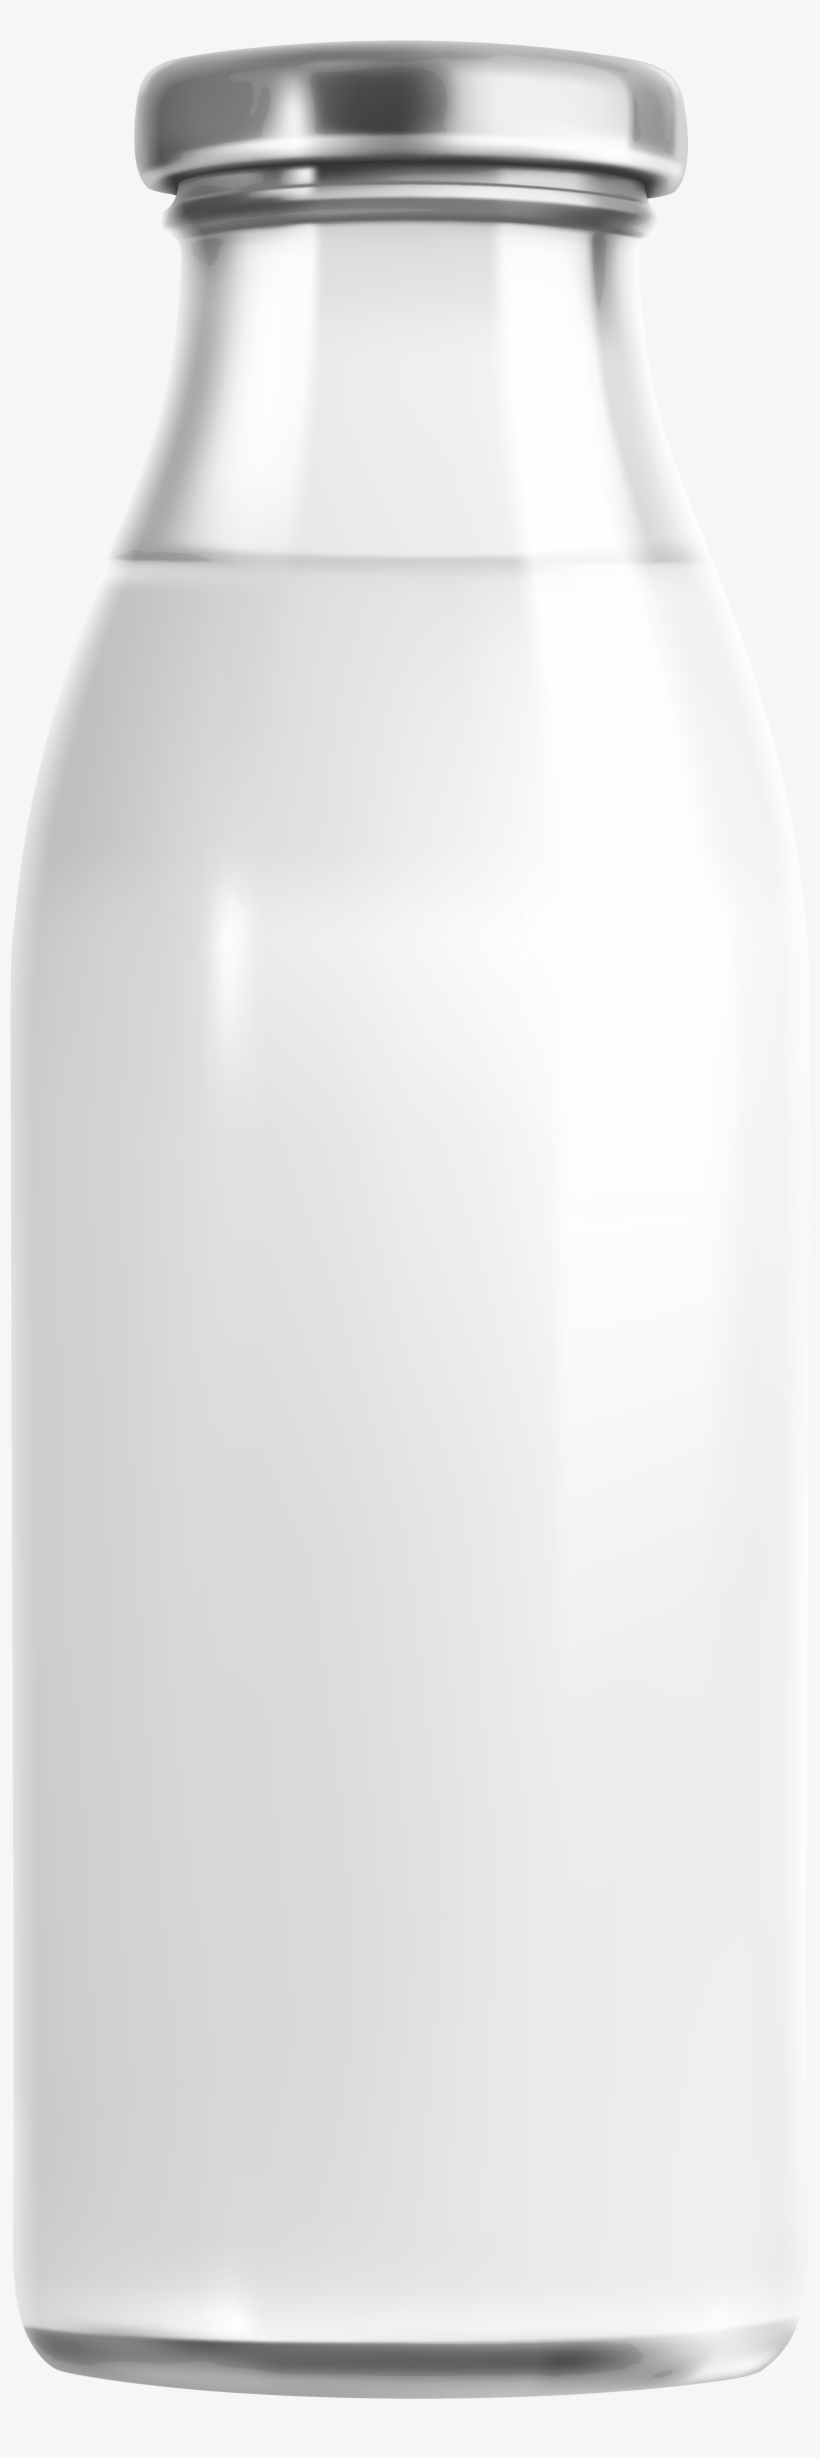 Milk Bottle Png Clip Art - Transparent Milk Bottle Png, transparent png #672038